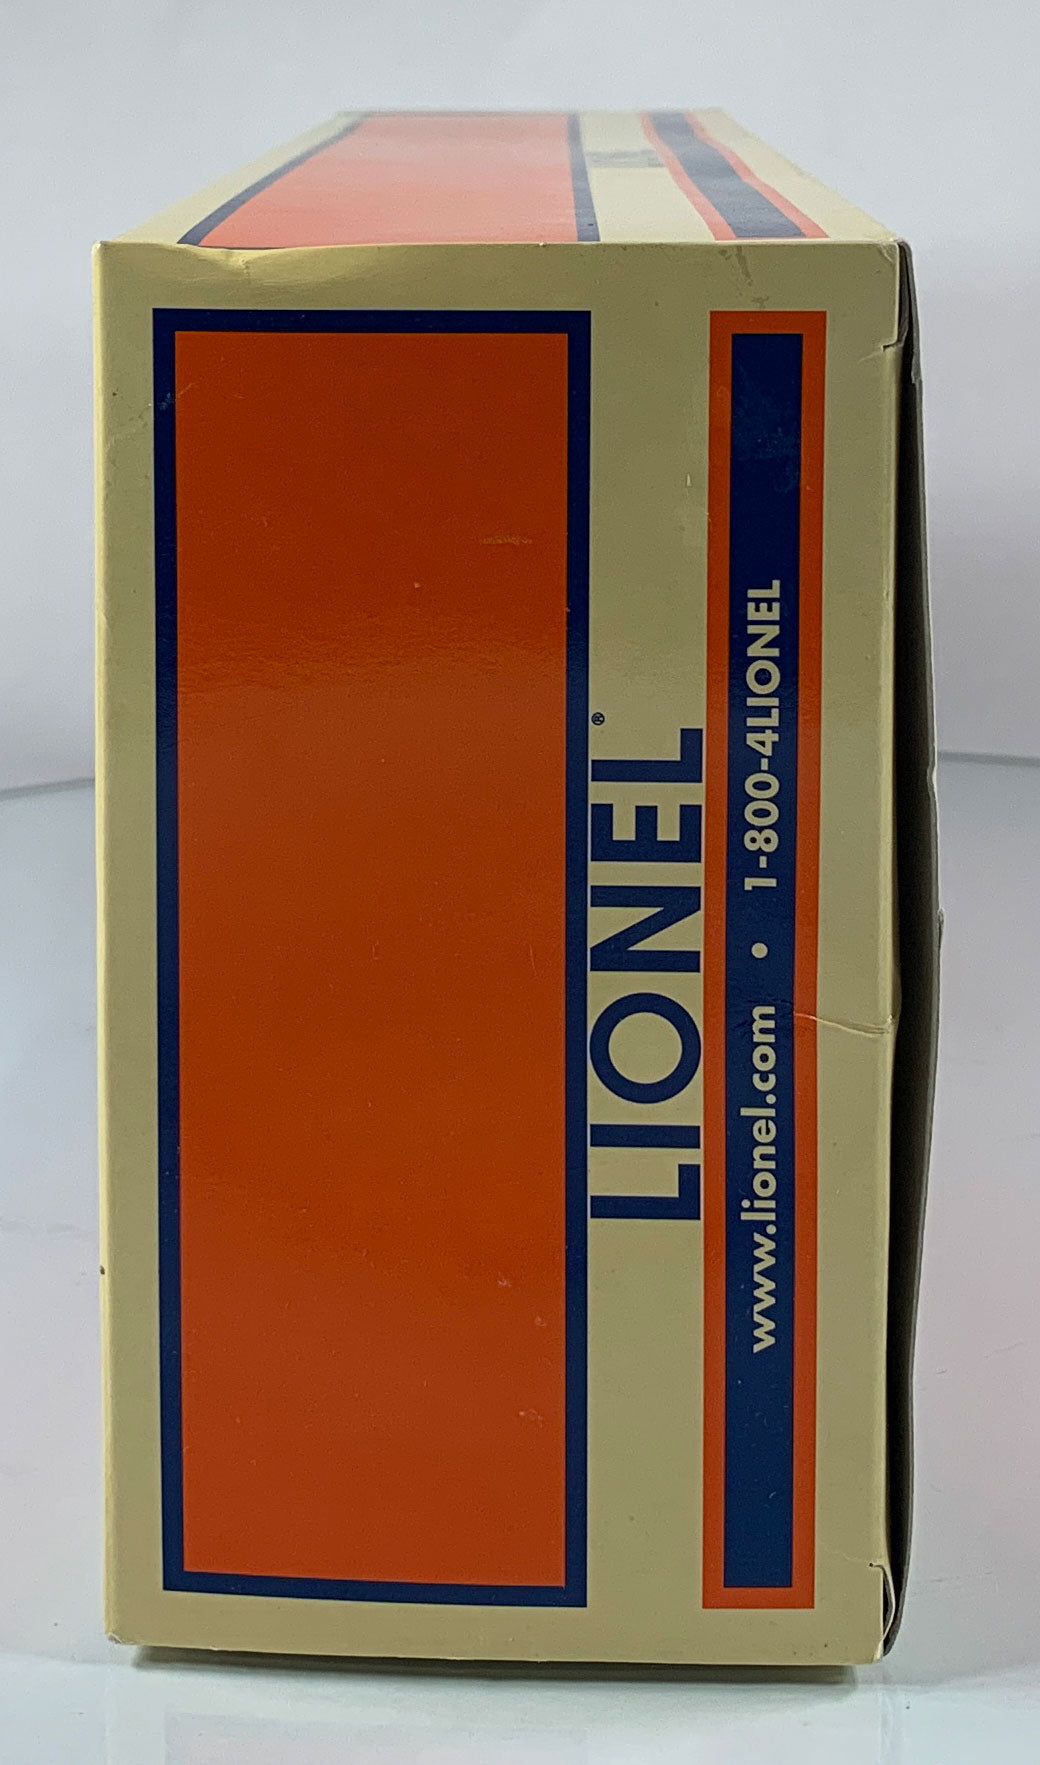 LIONEL • O GAUGE • 2006 LOTS Delaware & Hudson PS-2 Cement Hopper 6-52346 • NEW OLD STOCK